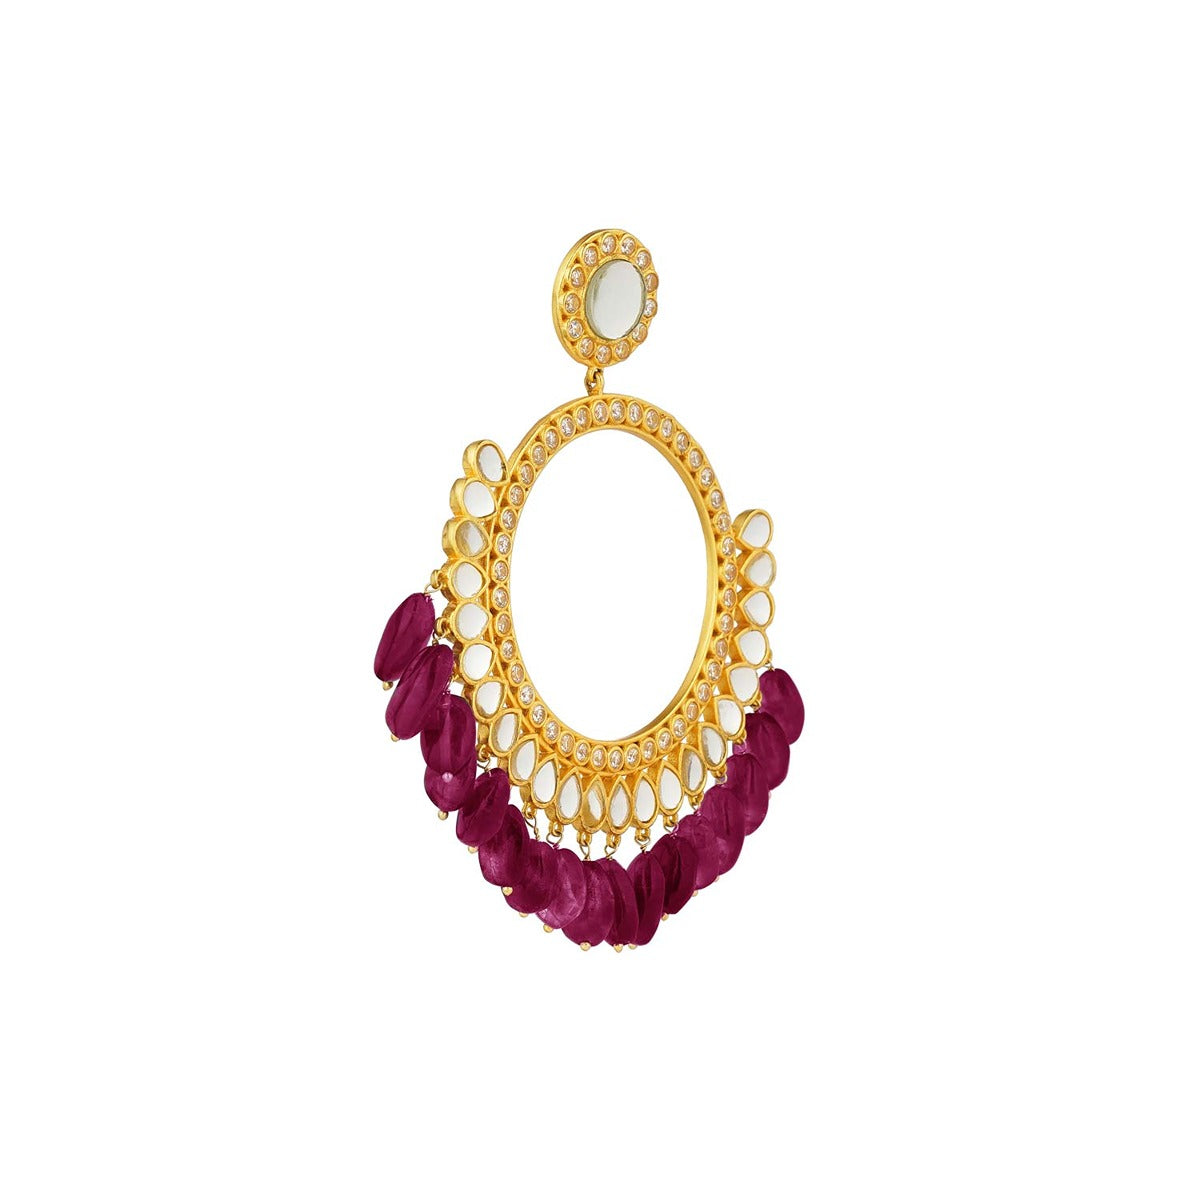 Mehfil Earrings - Rani Pink Hued Stone